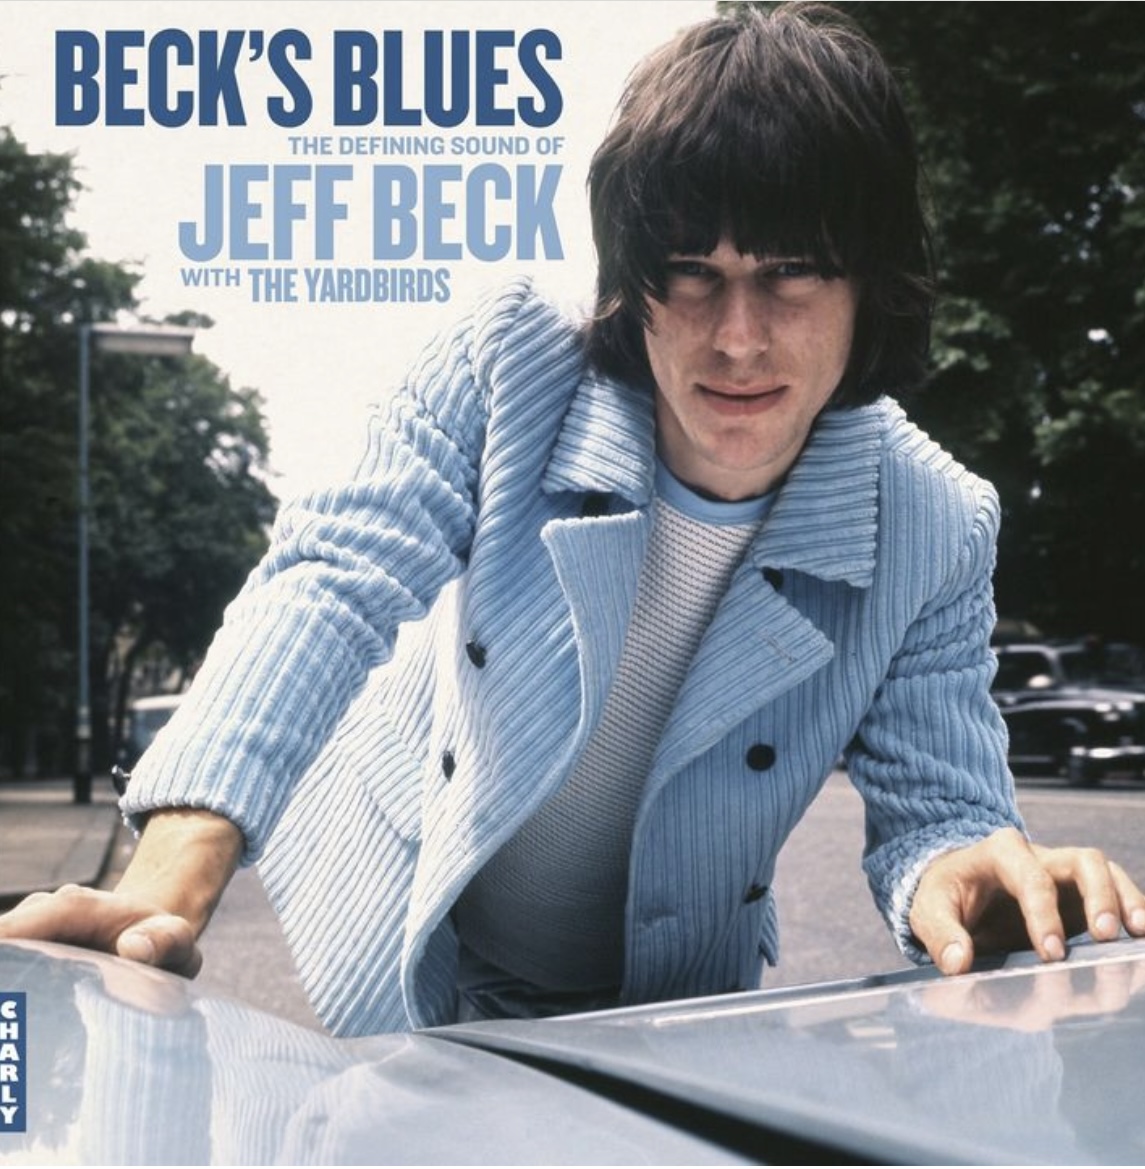 Making Time LP Review: The Yardbirds - Beck's Blues makingtime.co.uk/cds/cdrev03202…